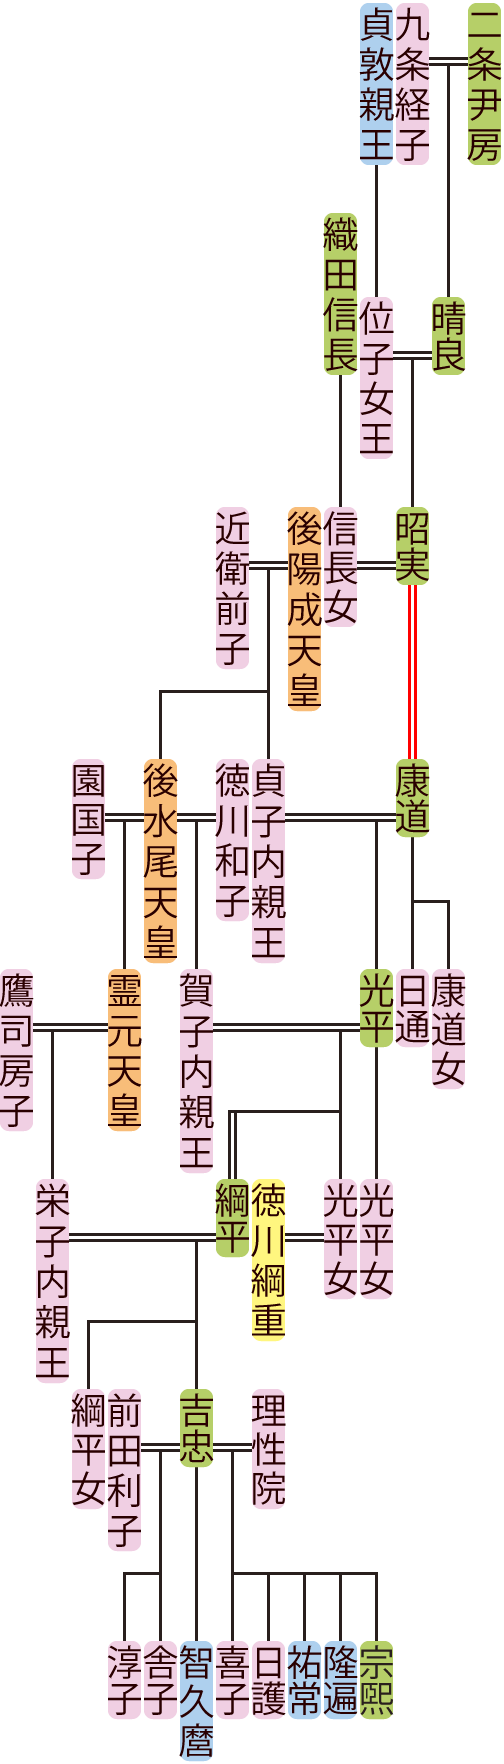 二条昭実～綱平の系図